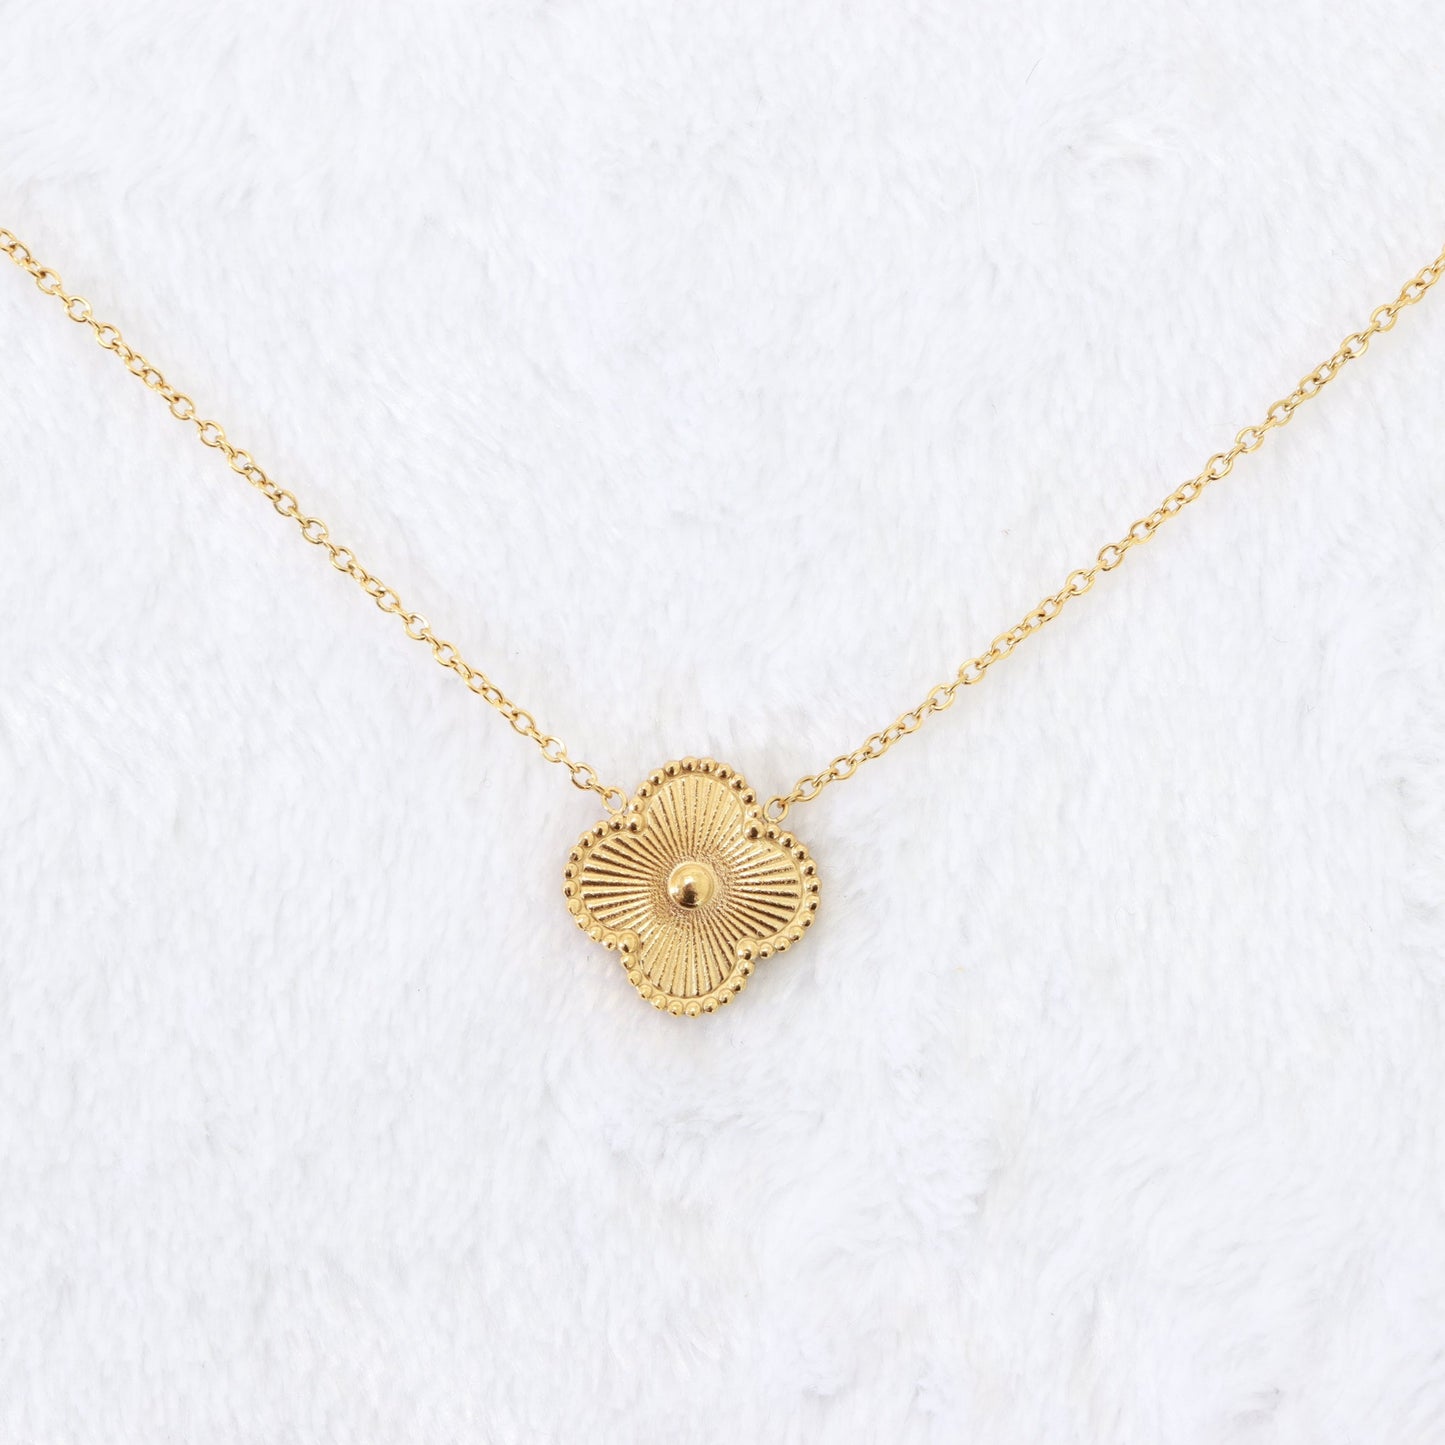 1pc Delicate Gold-tone Clover Design Necklace Personalized Pendant